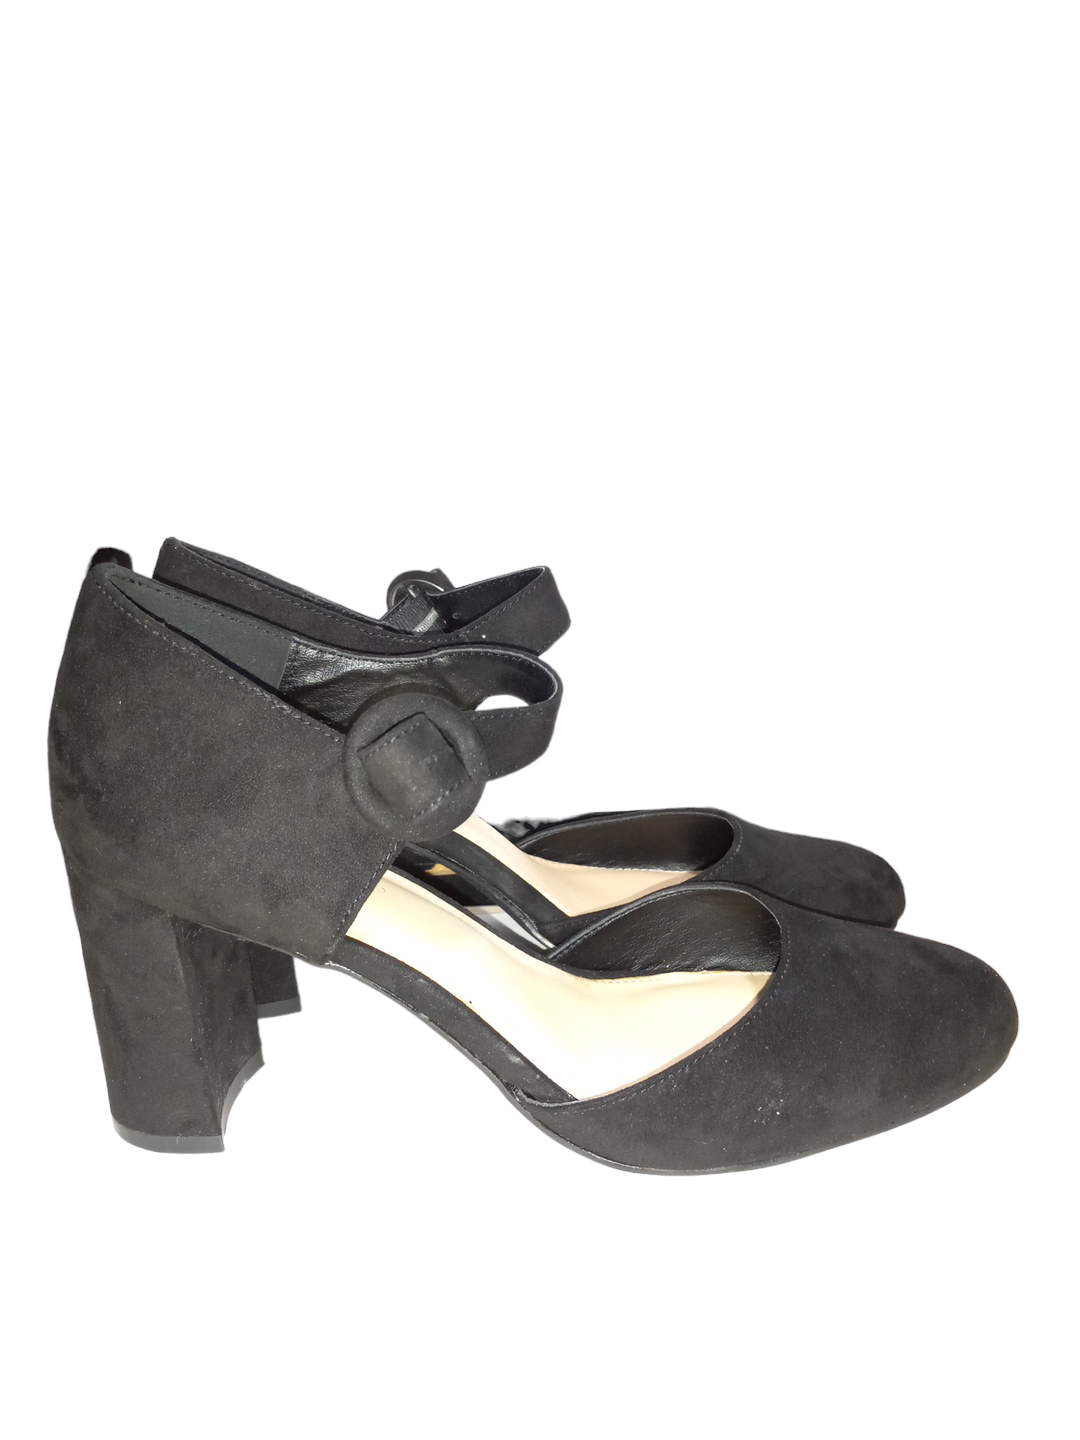 Black Shoes Heels Block Xappeal, Size 10